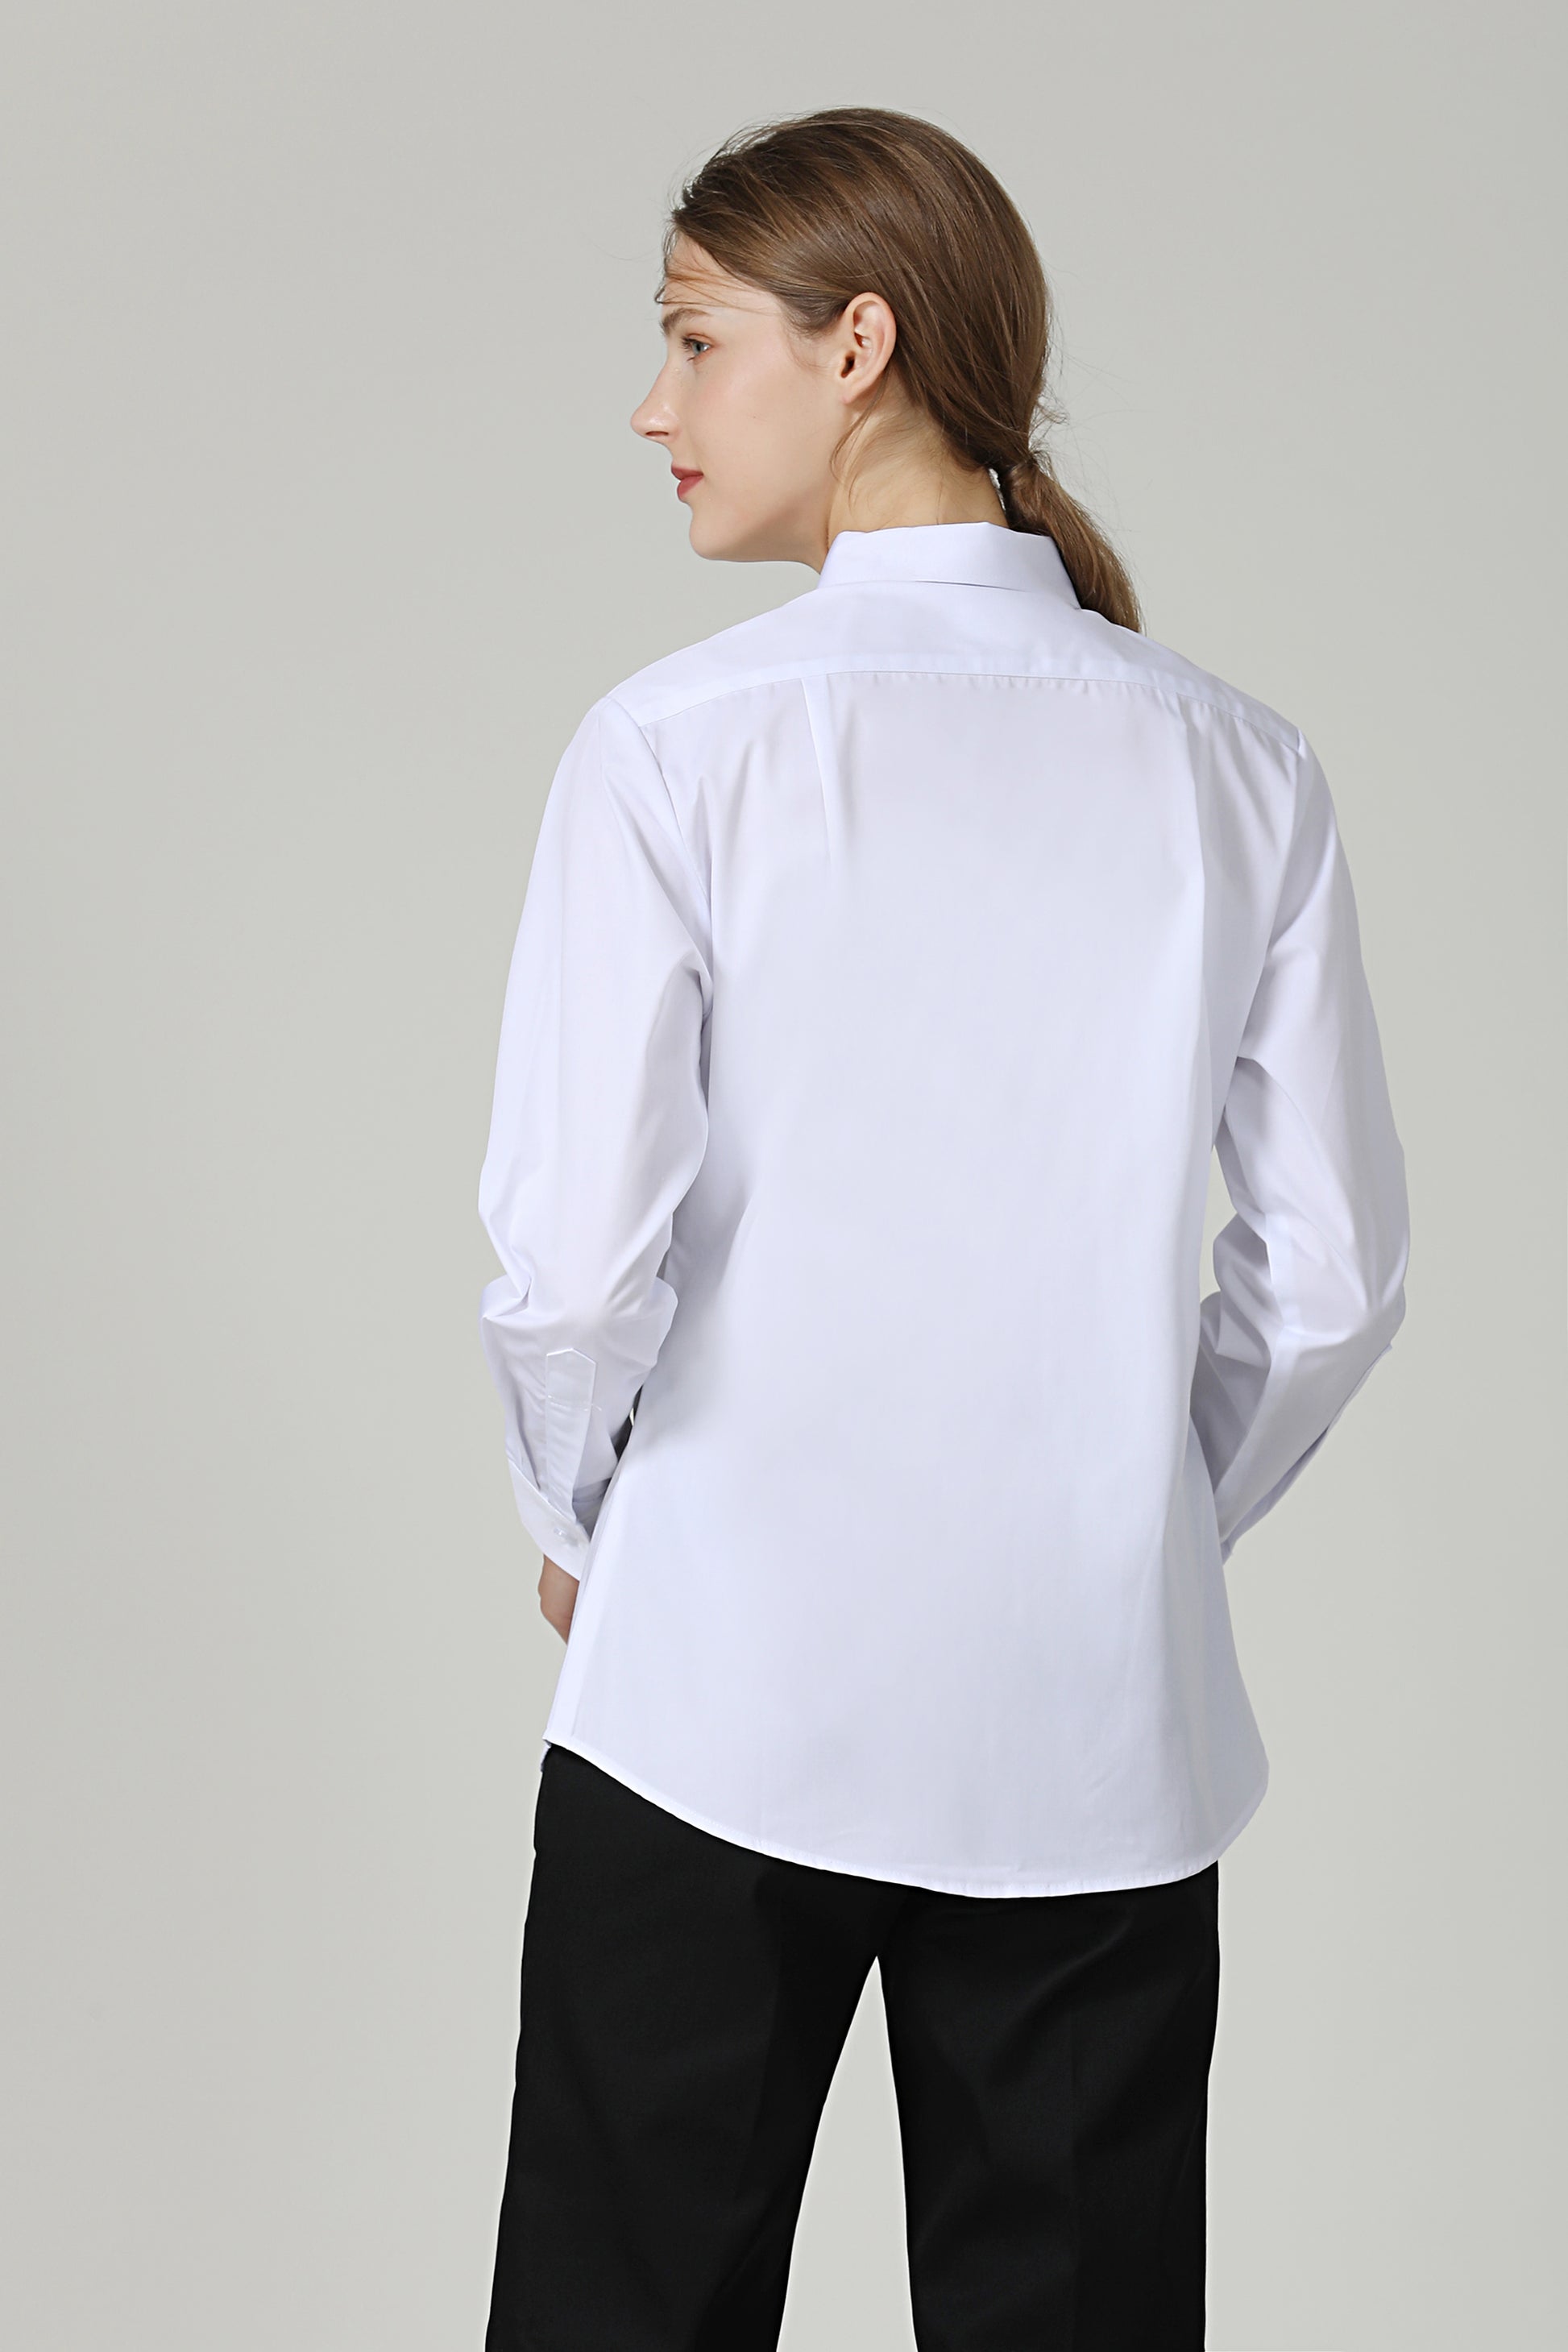 Service Shirt L|S, Female, White - Green Chef Wear